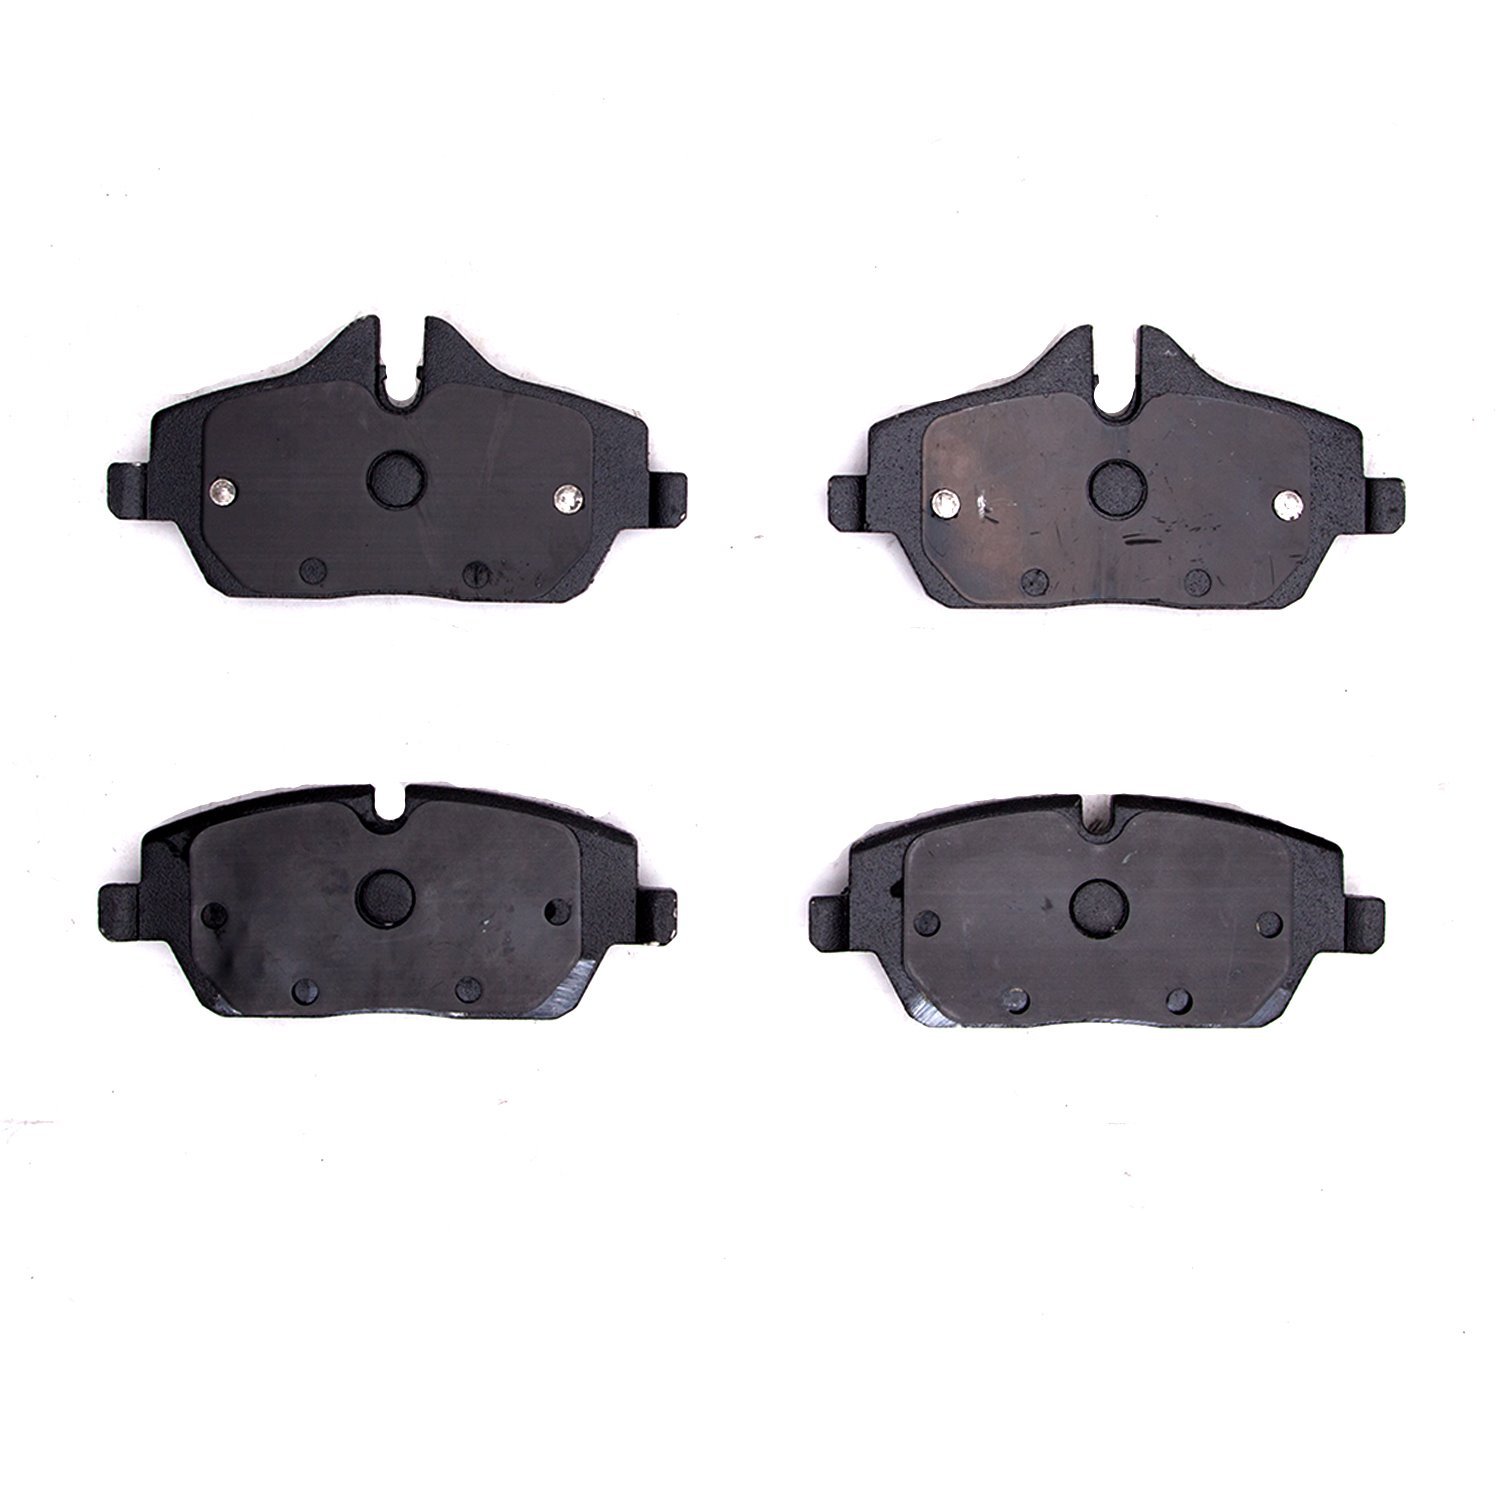 1600-1308-00 5000 Euro Ceramic Brake Pads, Fits Select Multiple Makes/Models, Position: Front